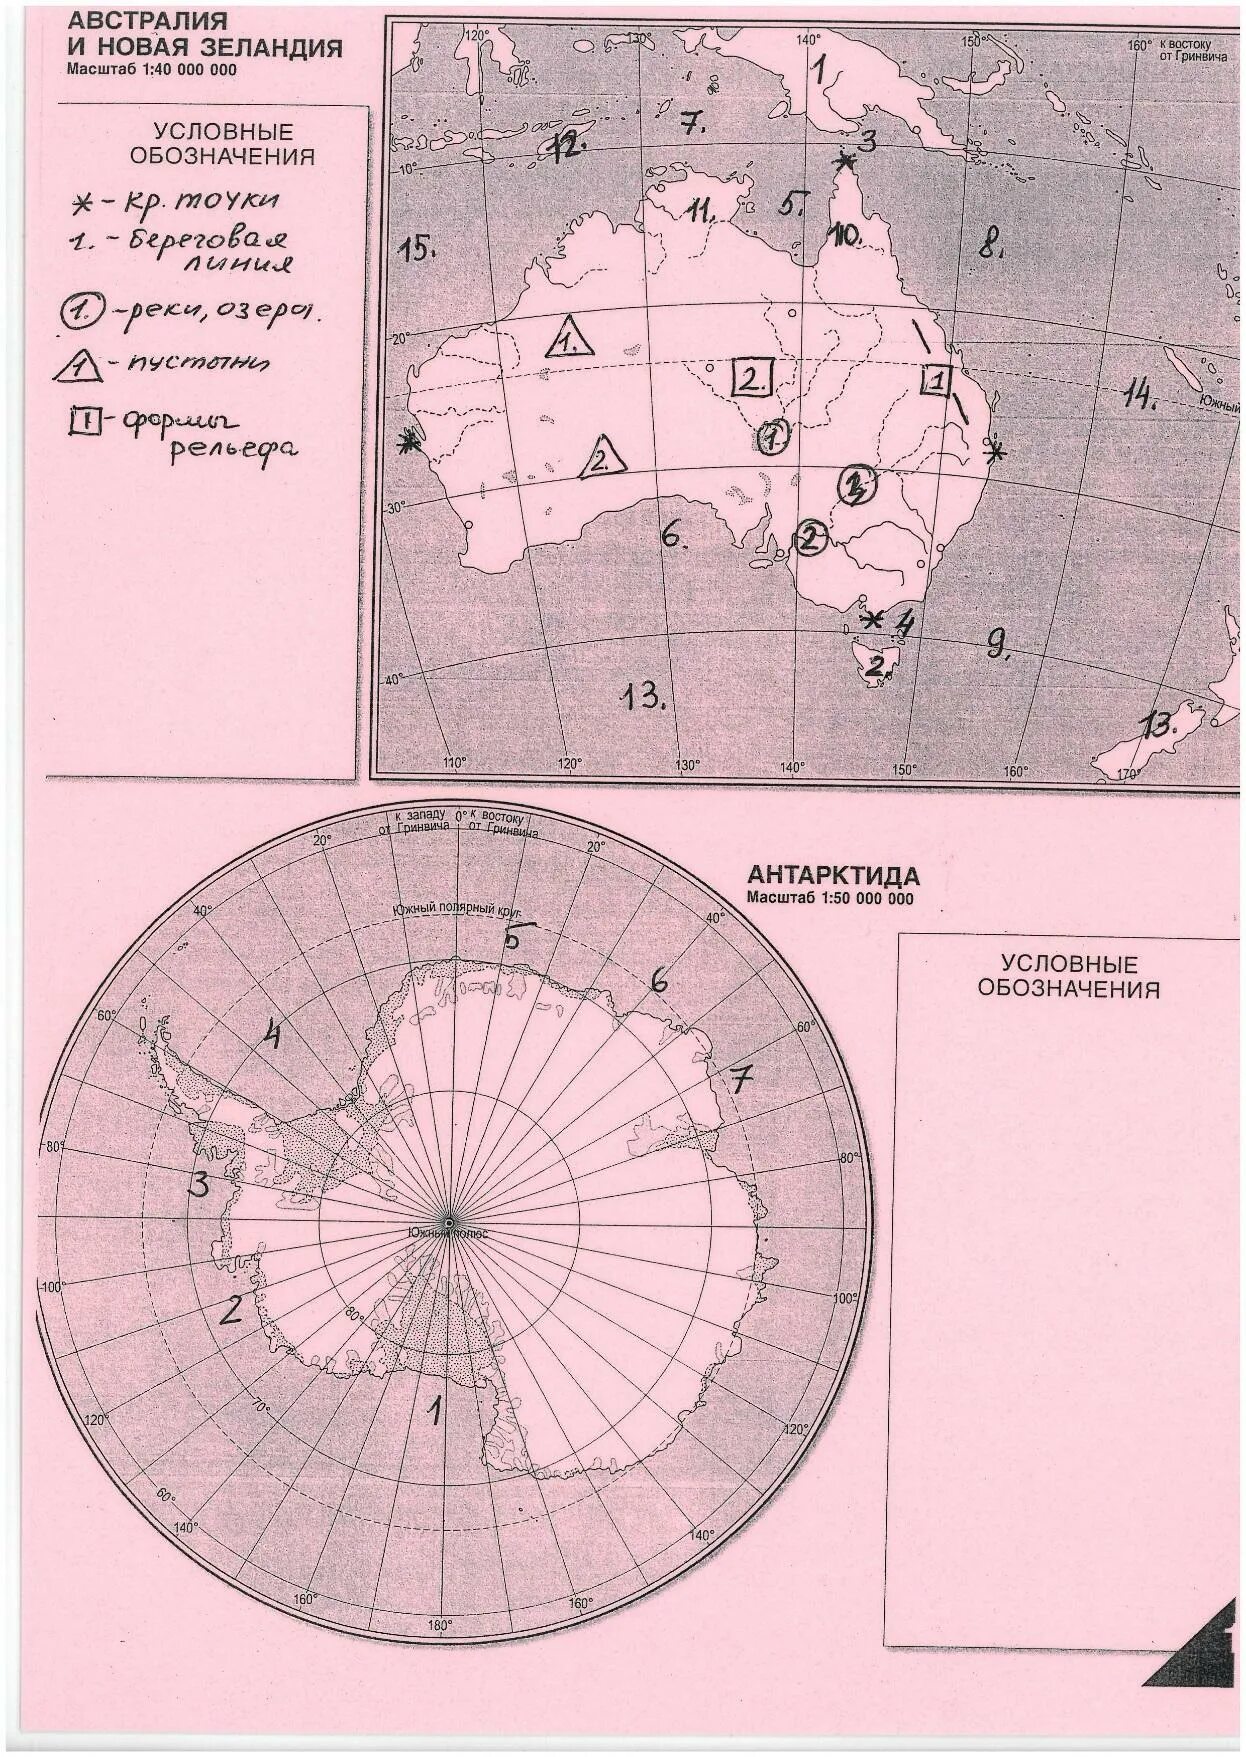 Австралия Антарктида контурная карта 7 класс. География контурная карта 7 класс Австралия и Антарктида. Контурная карта по географии 7 класс Австралия Антарктида. Контурная карта Антарктиды.